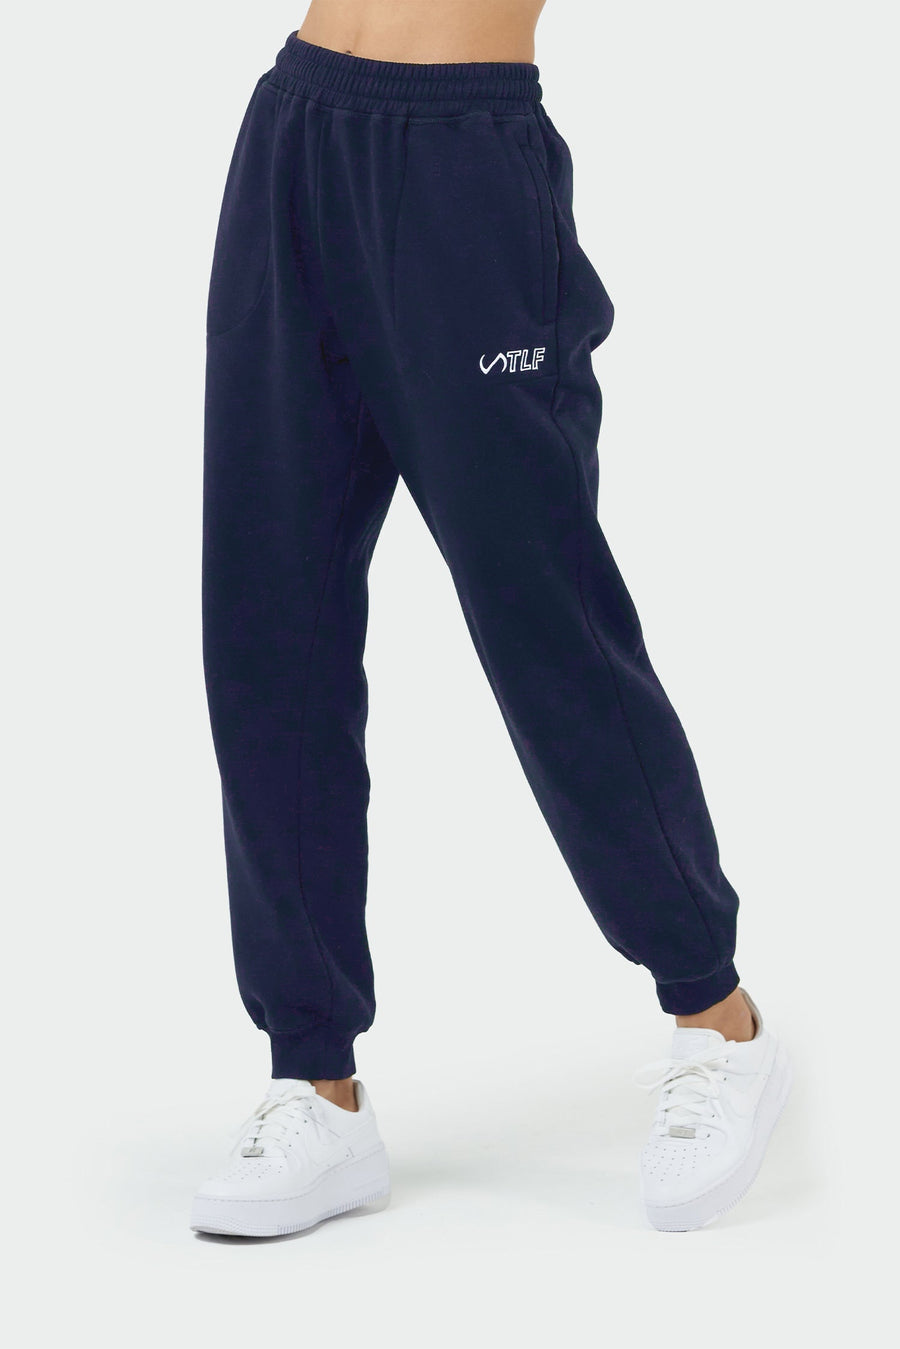 TLF Chill Fleece Oversized Sweatpants - Oversized Sweatpants Womens - Navy - 1